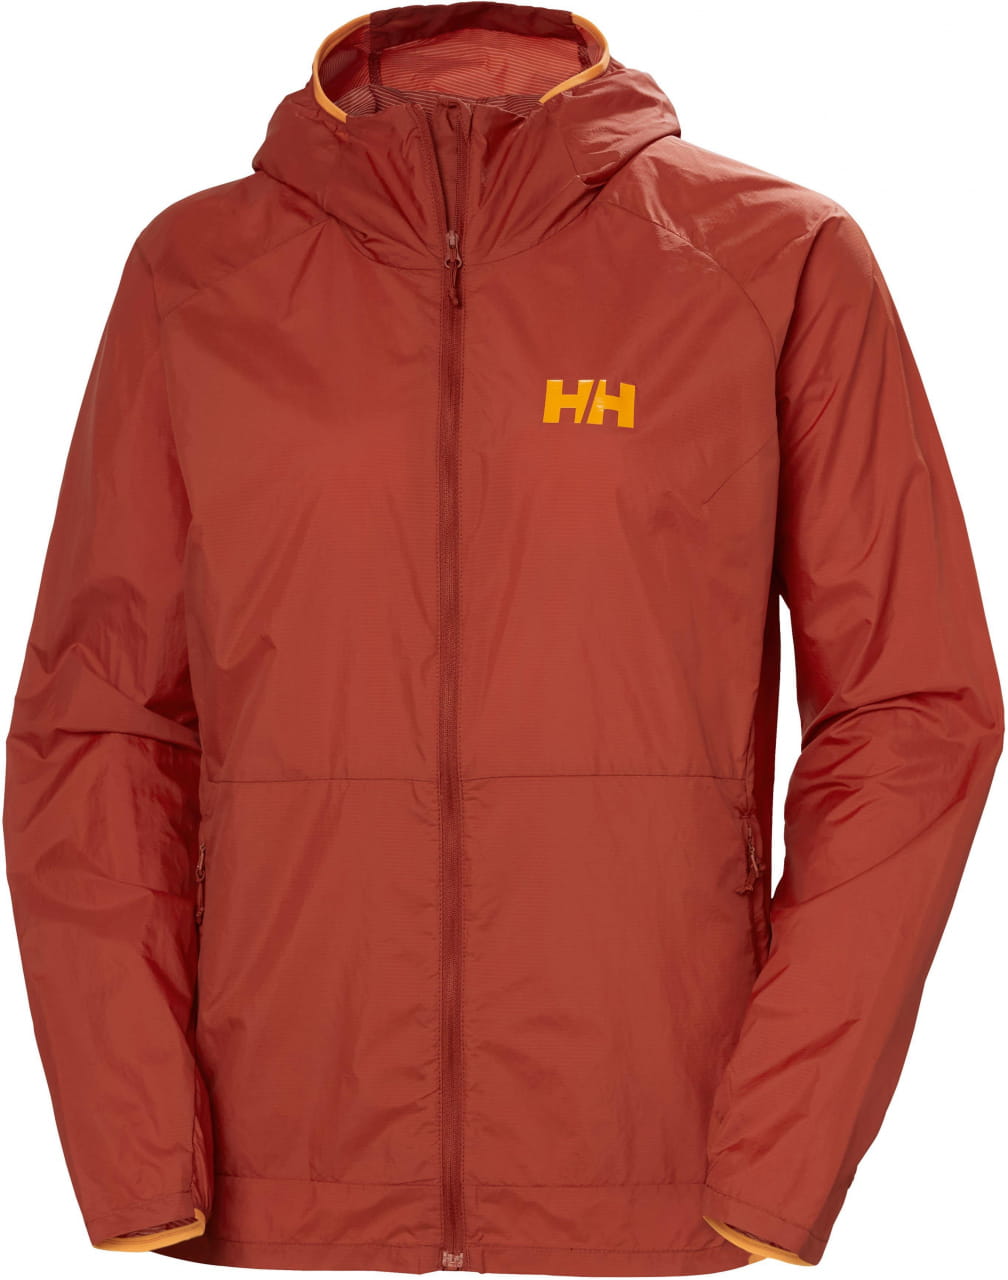 Jachetă pentru femei în aer liber Helly Hansen W Roam Wind Jacket